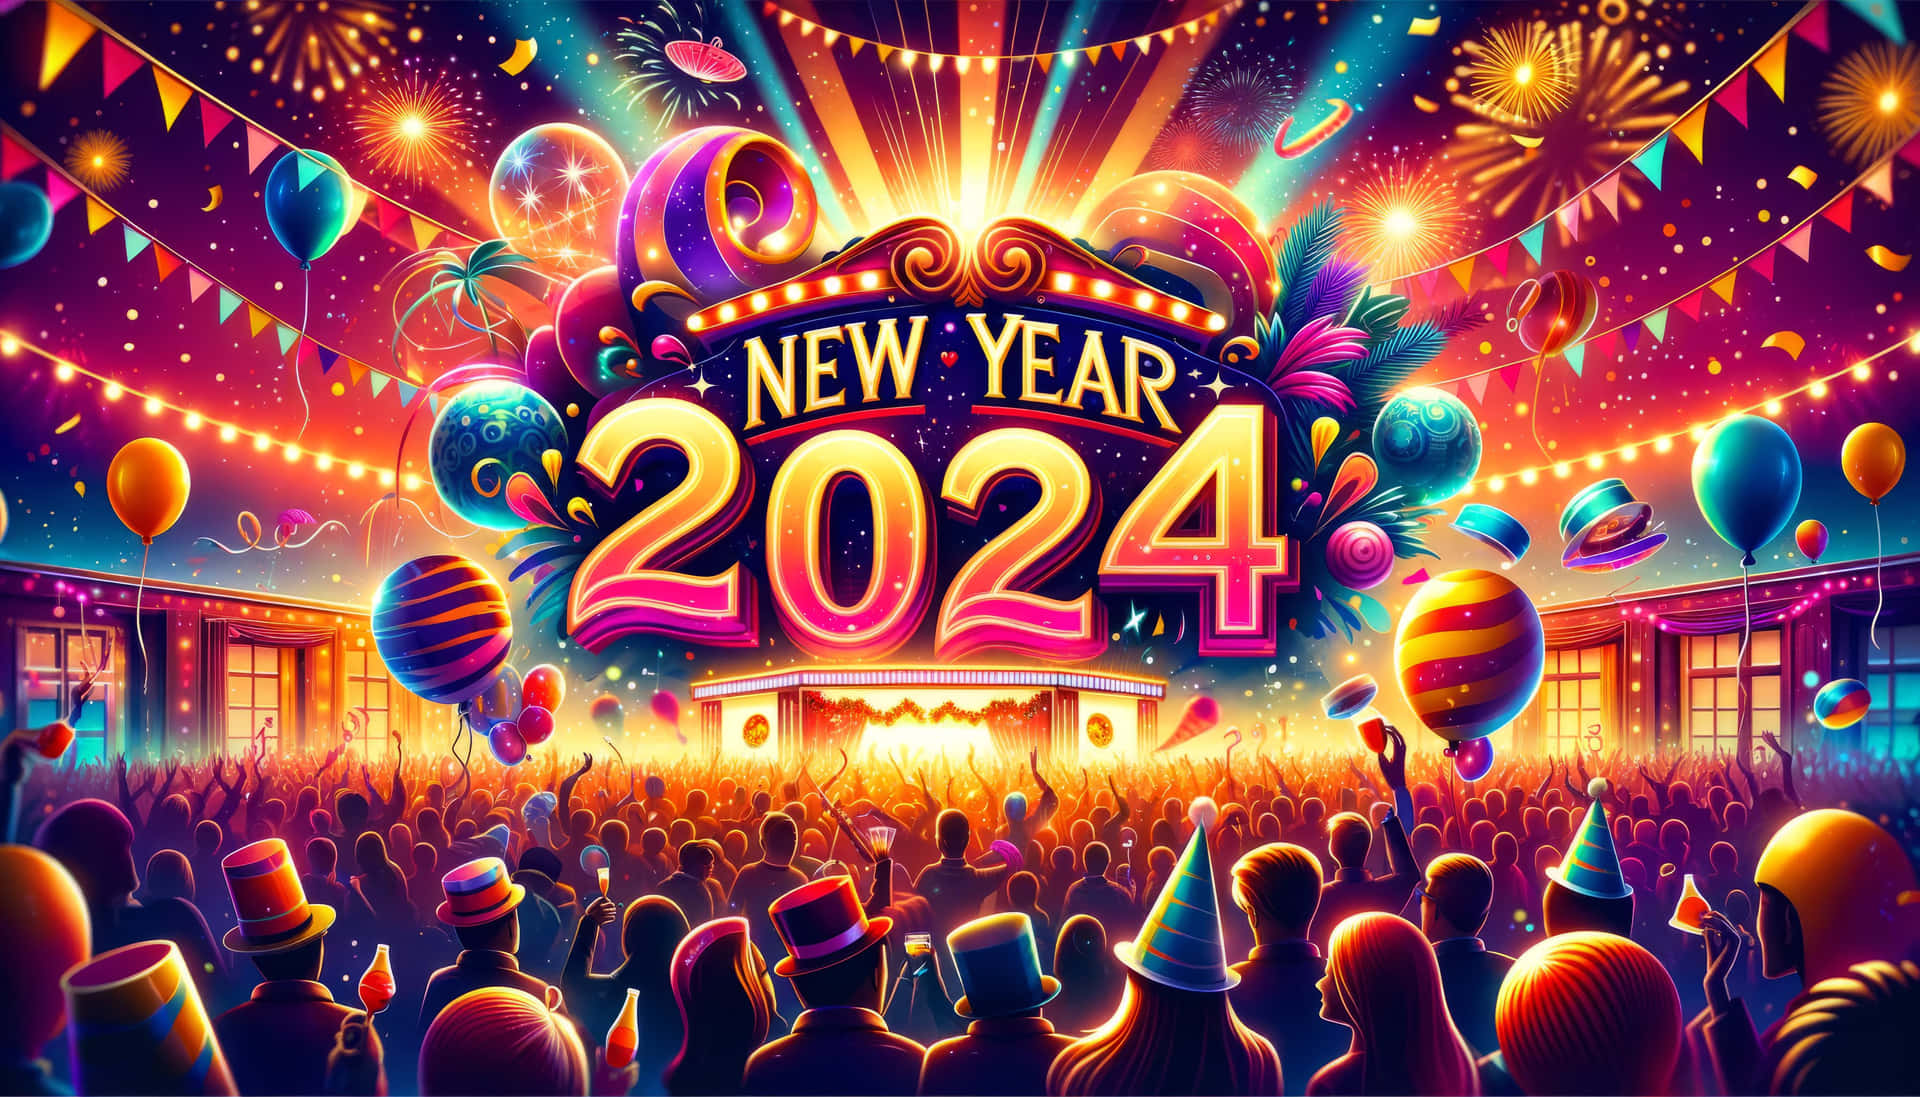 New Year2024 Celebration Crowd Illustration Wallpaper